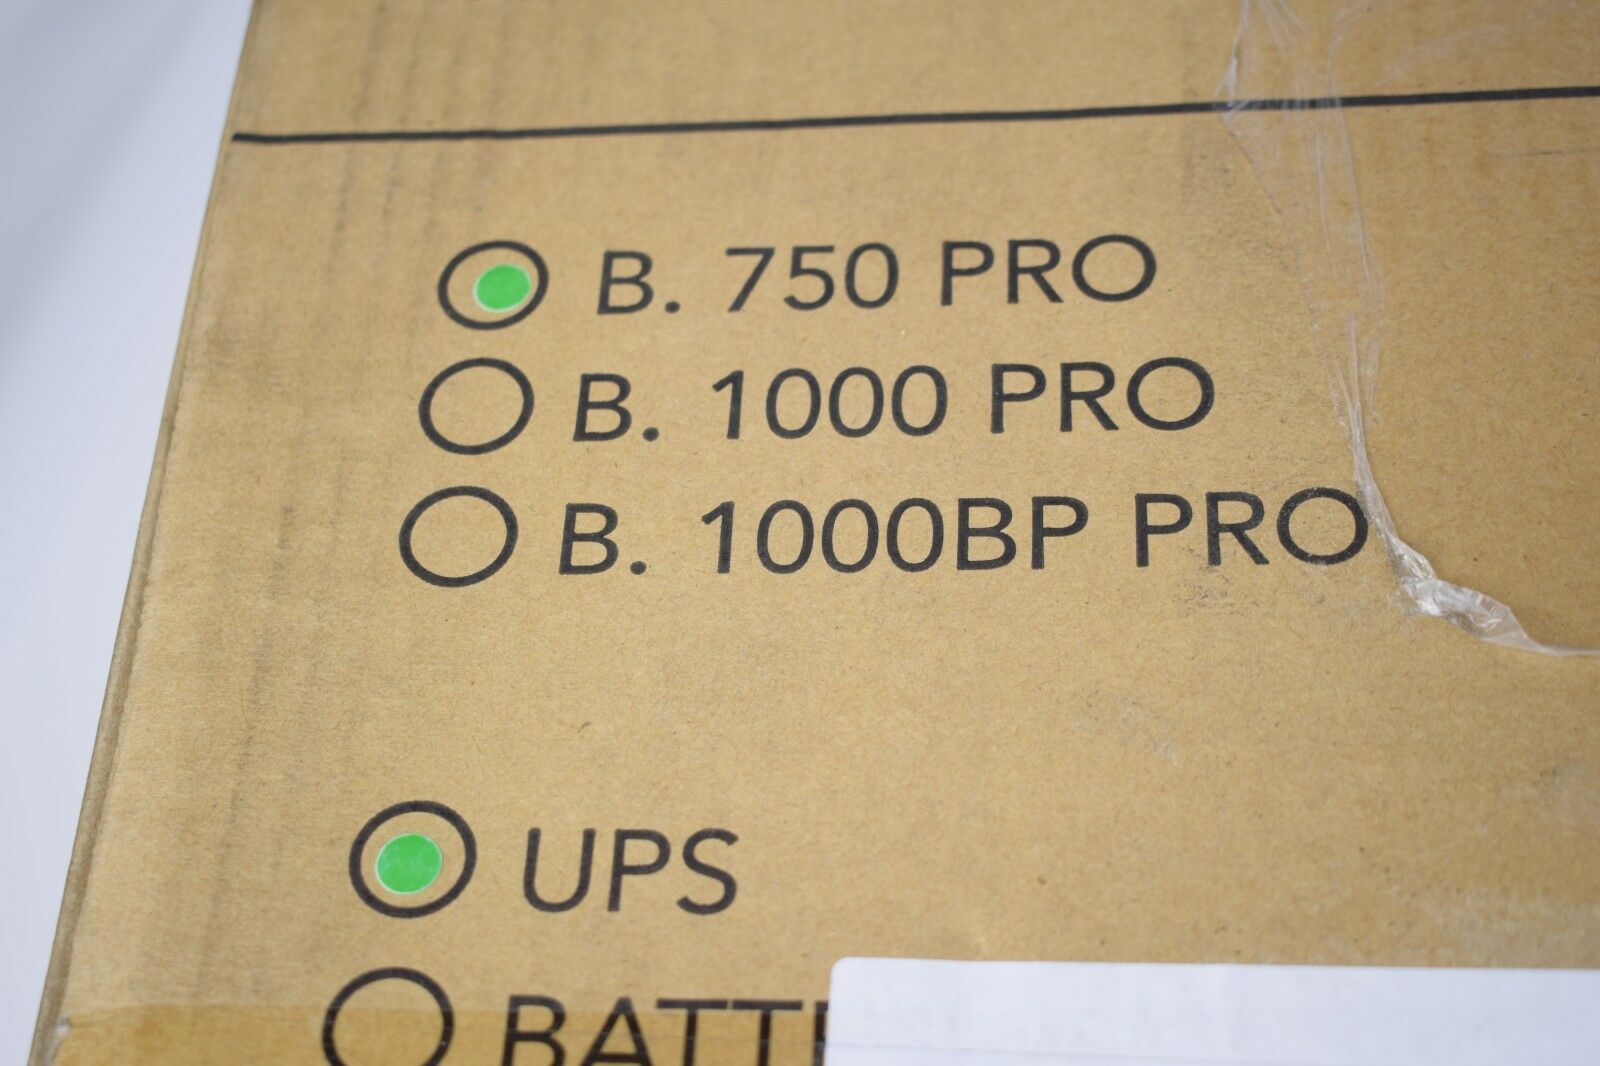 AEG Protect B. PRO B. 750 PRO mit Batterie 